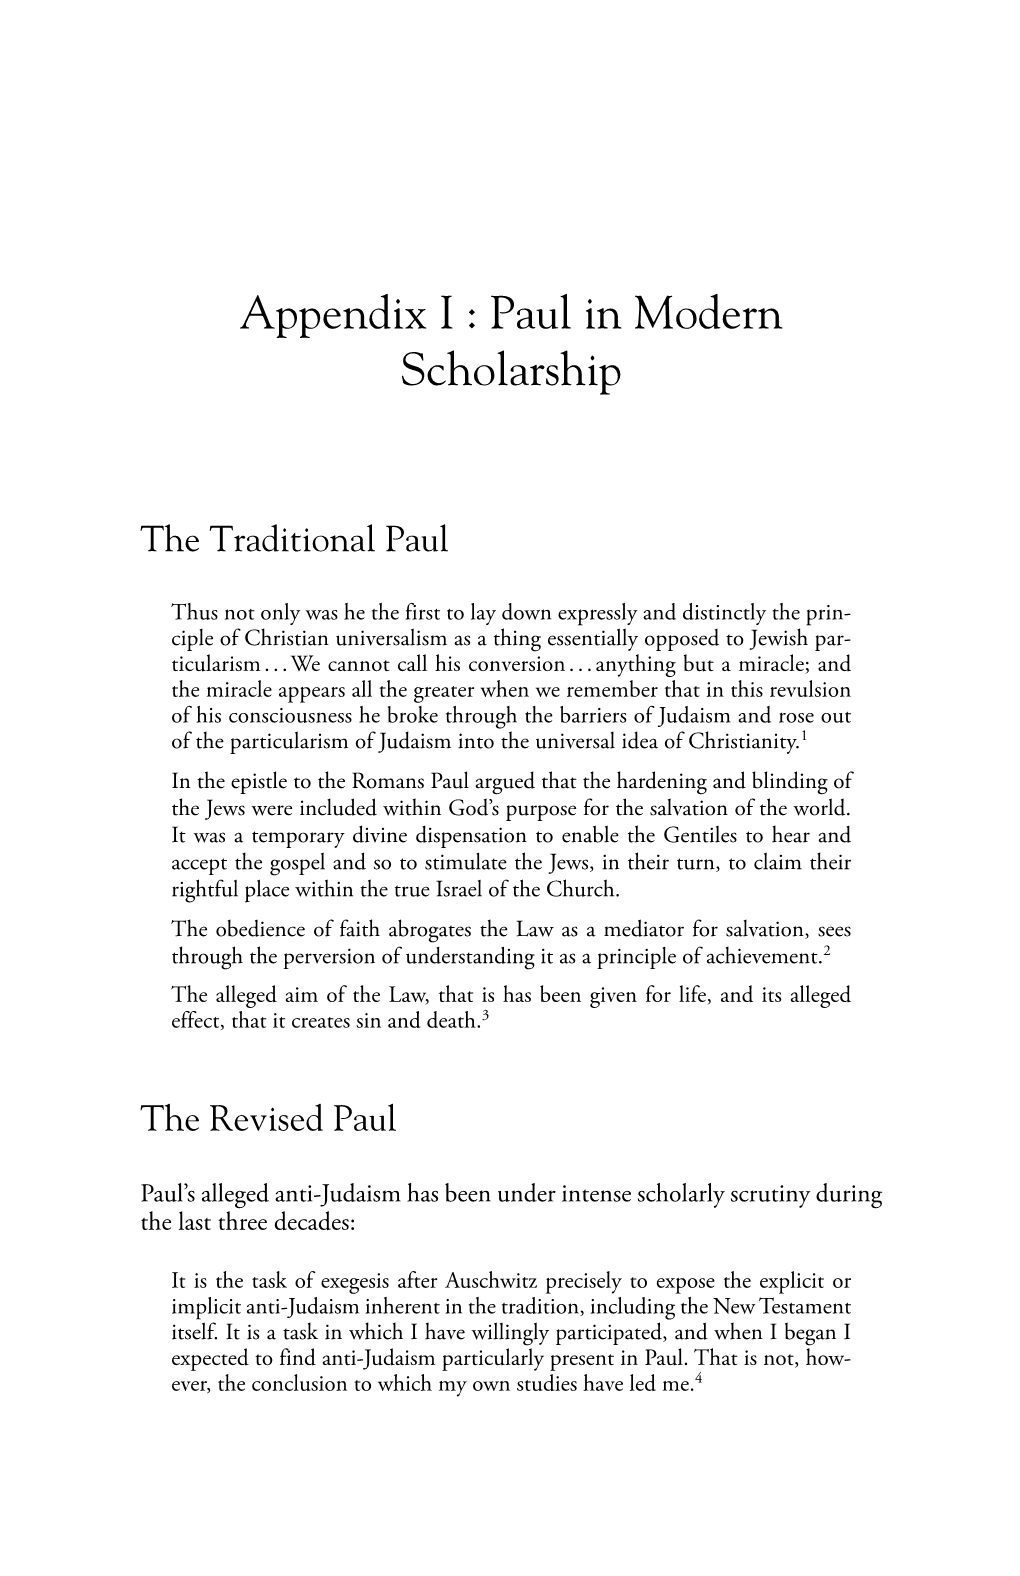 Appendix I : Paul in Modern Scholarship